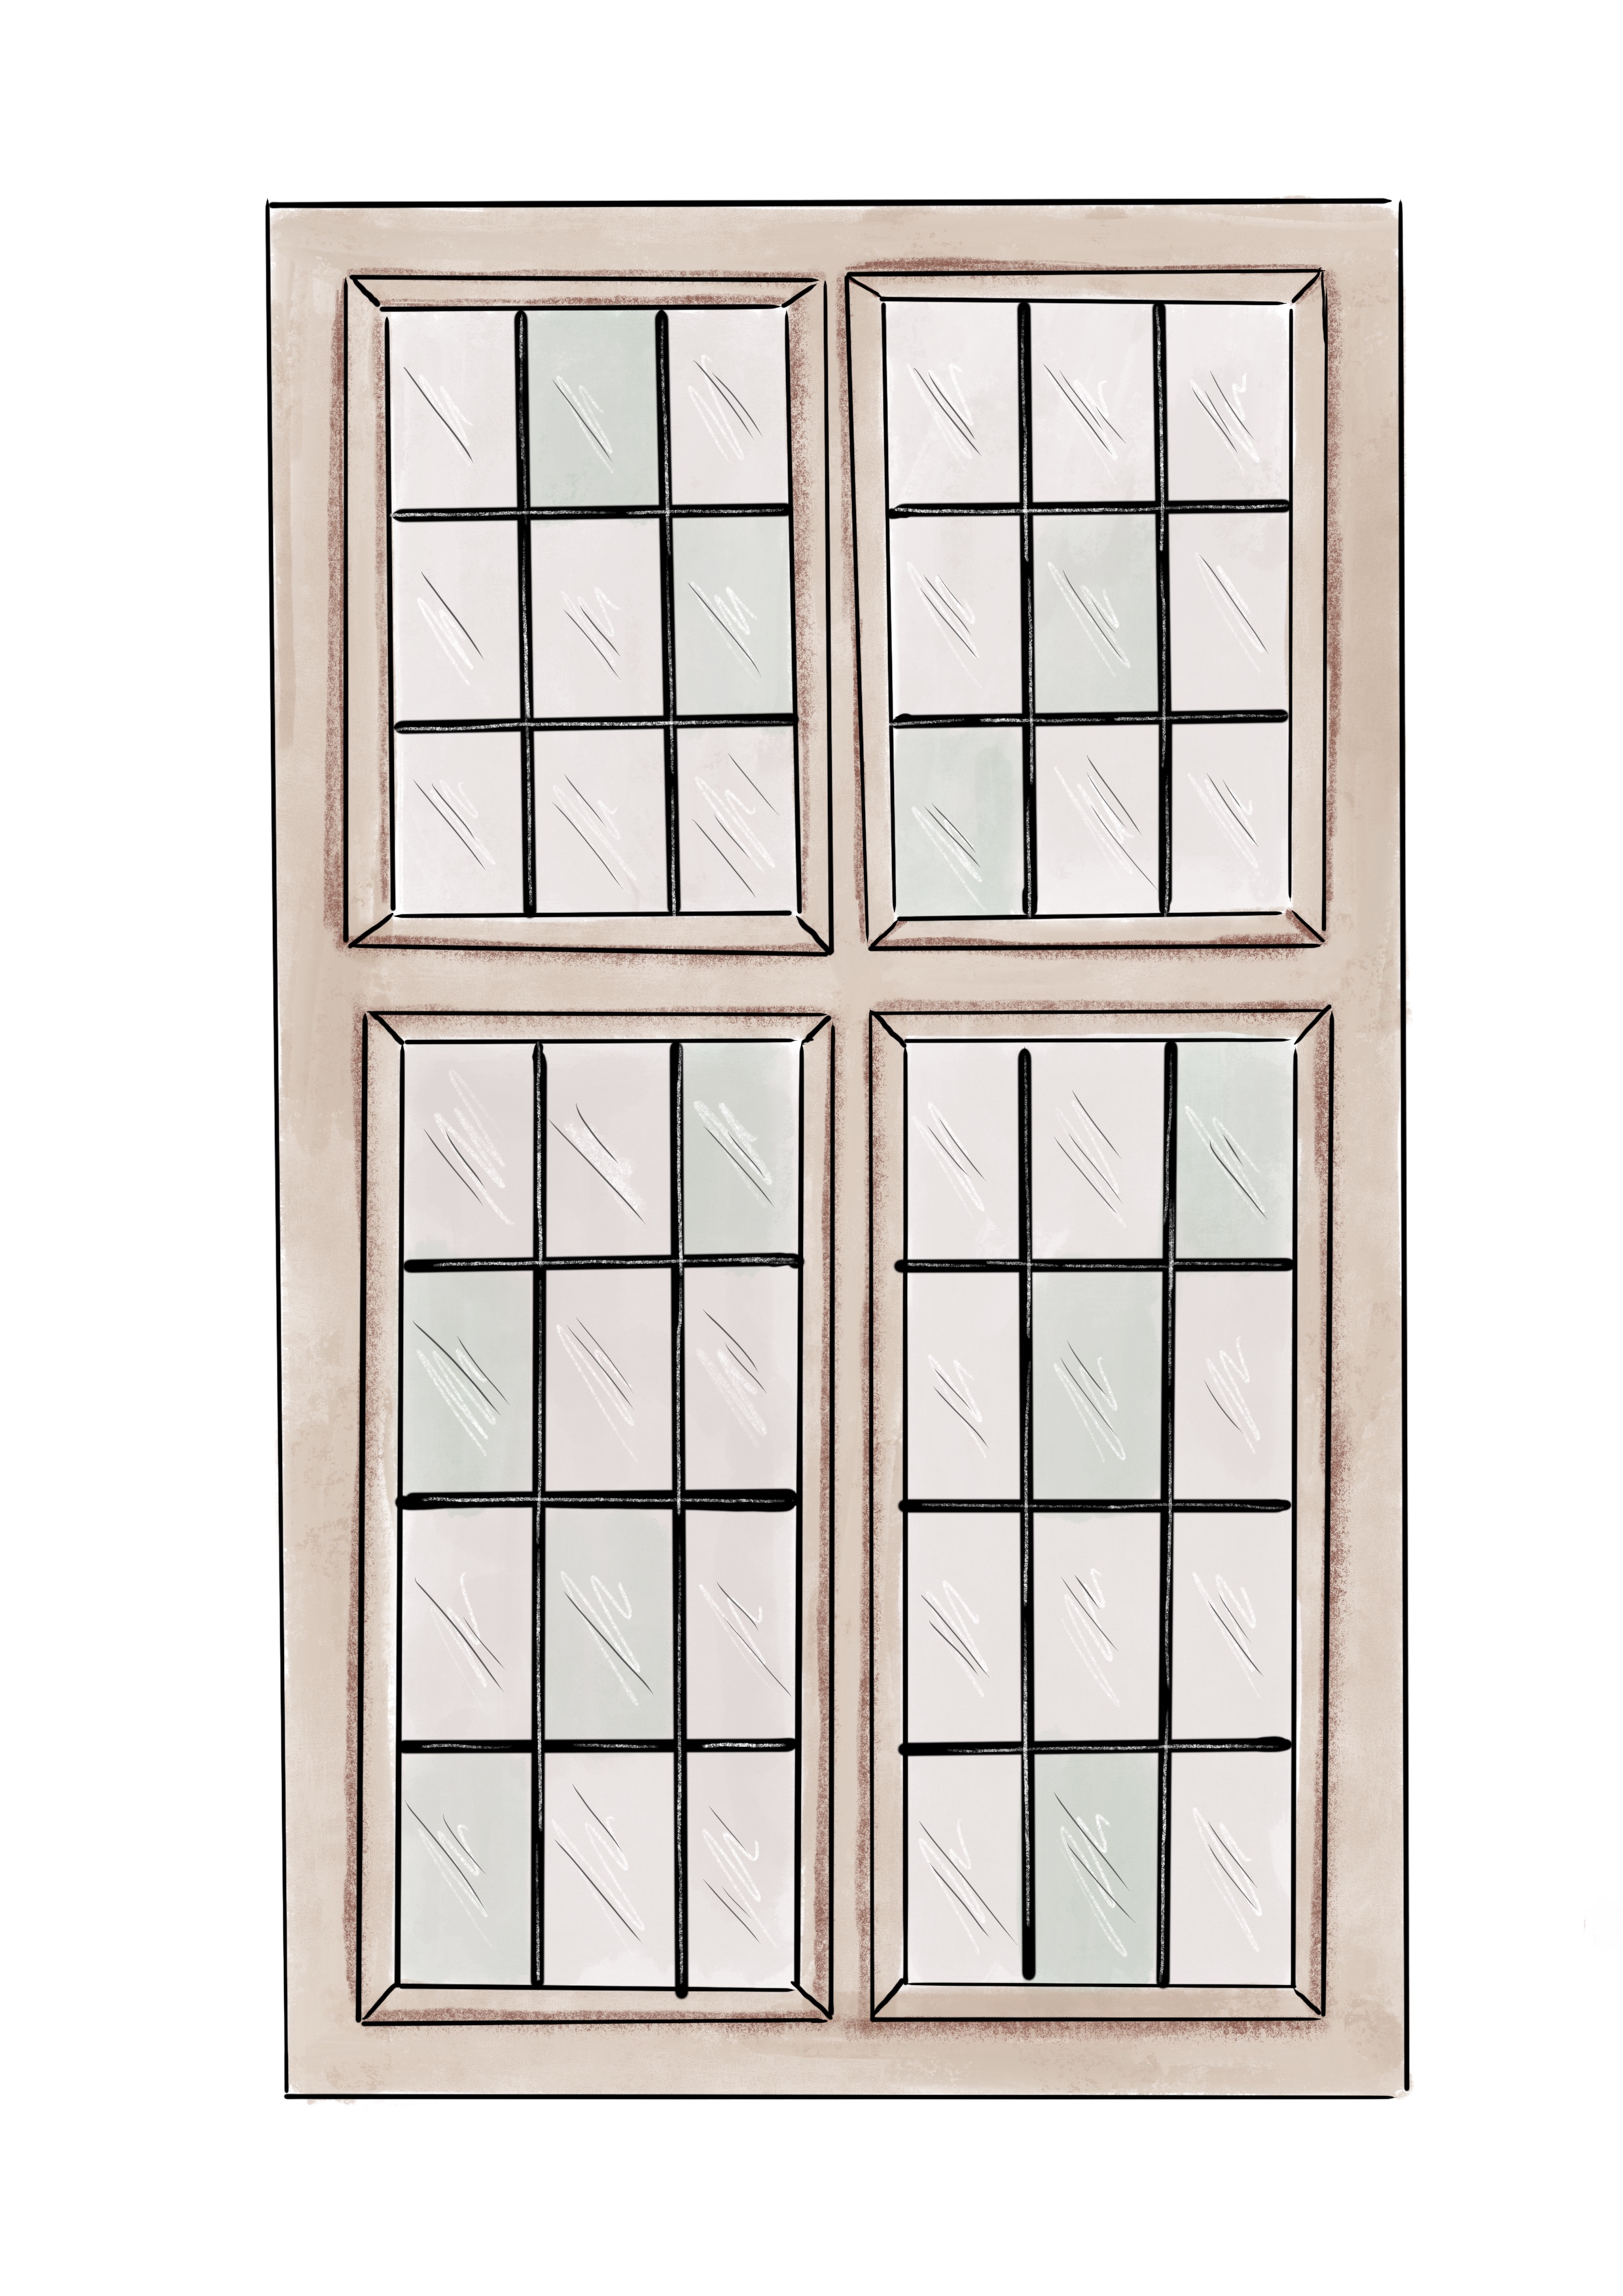 Late 17th century 'Cruciform' window with rectangular leaded lights.